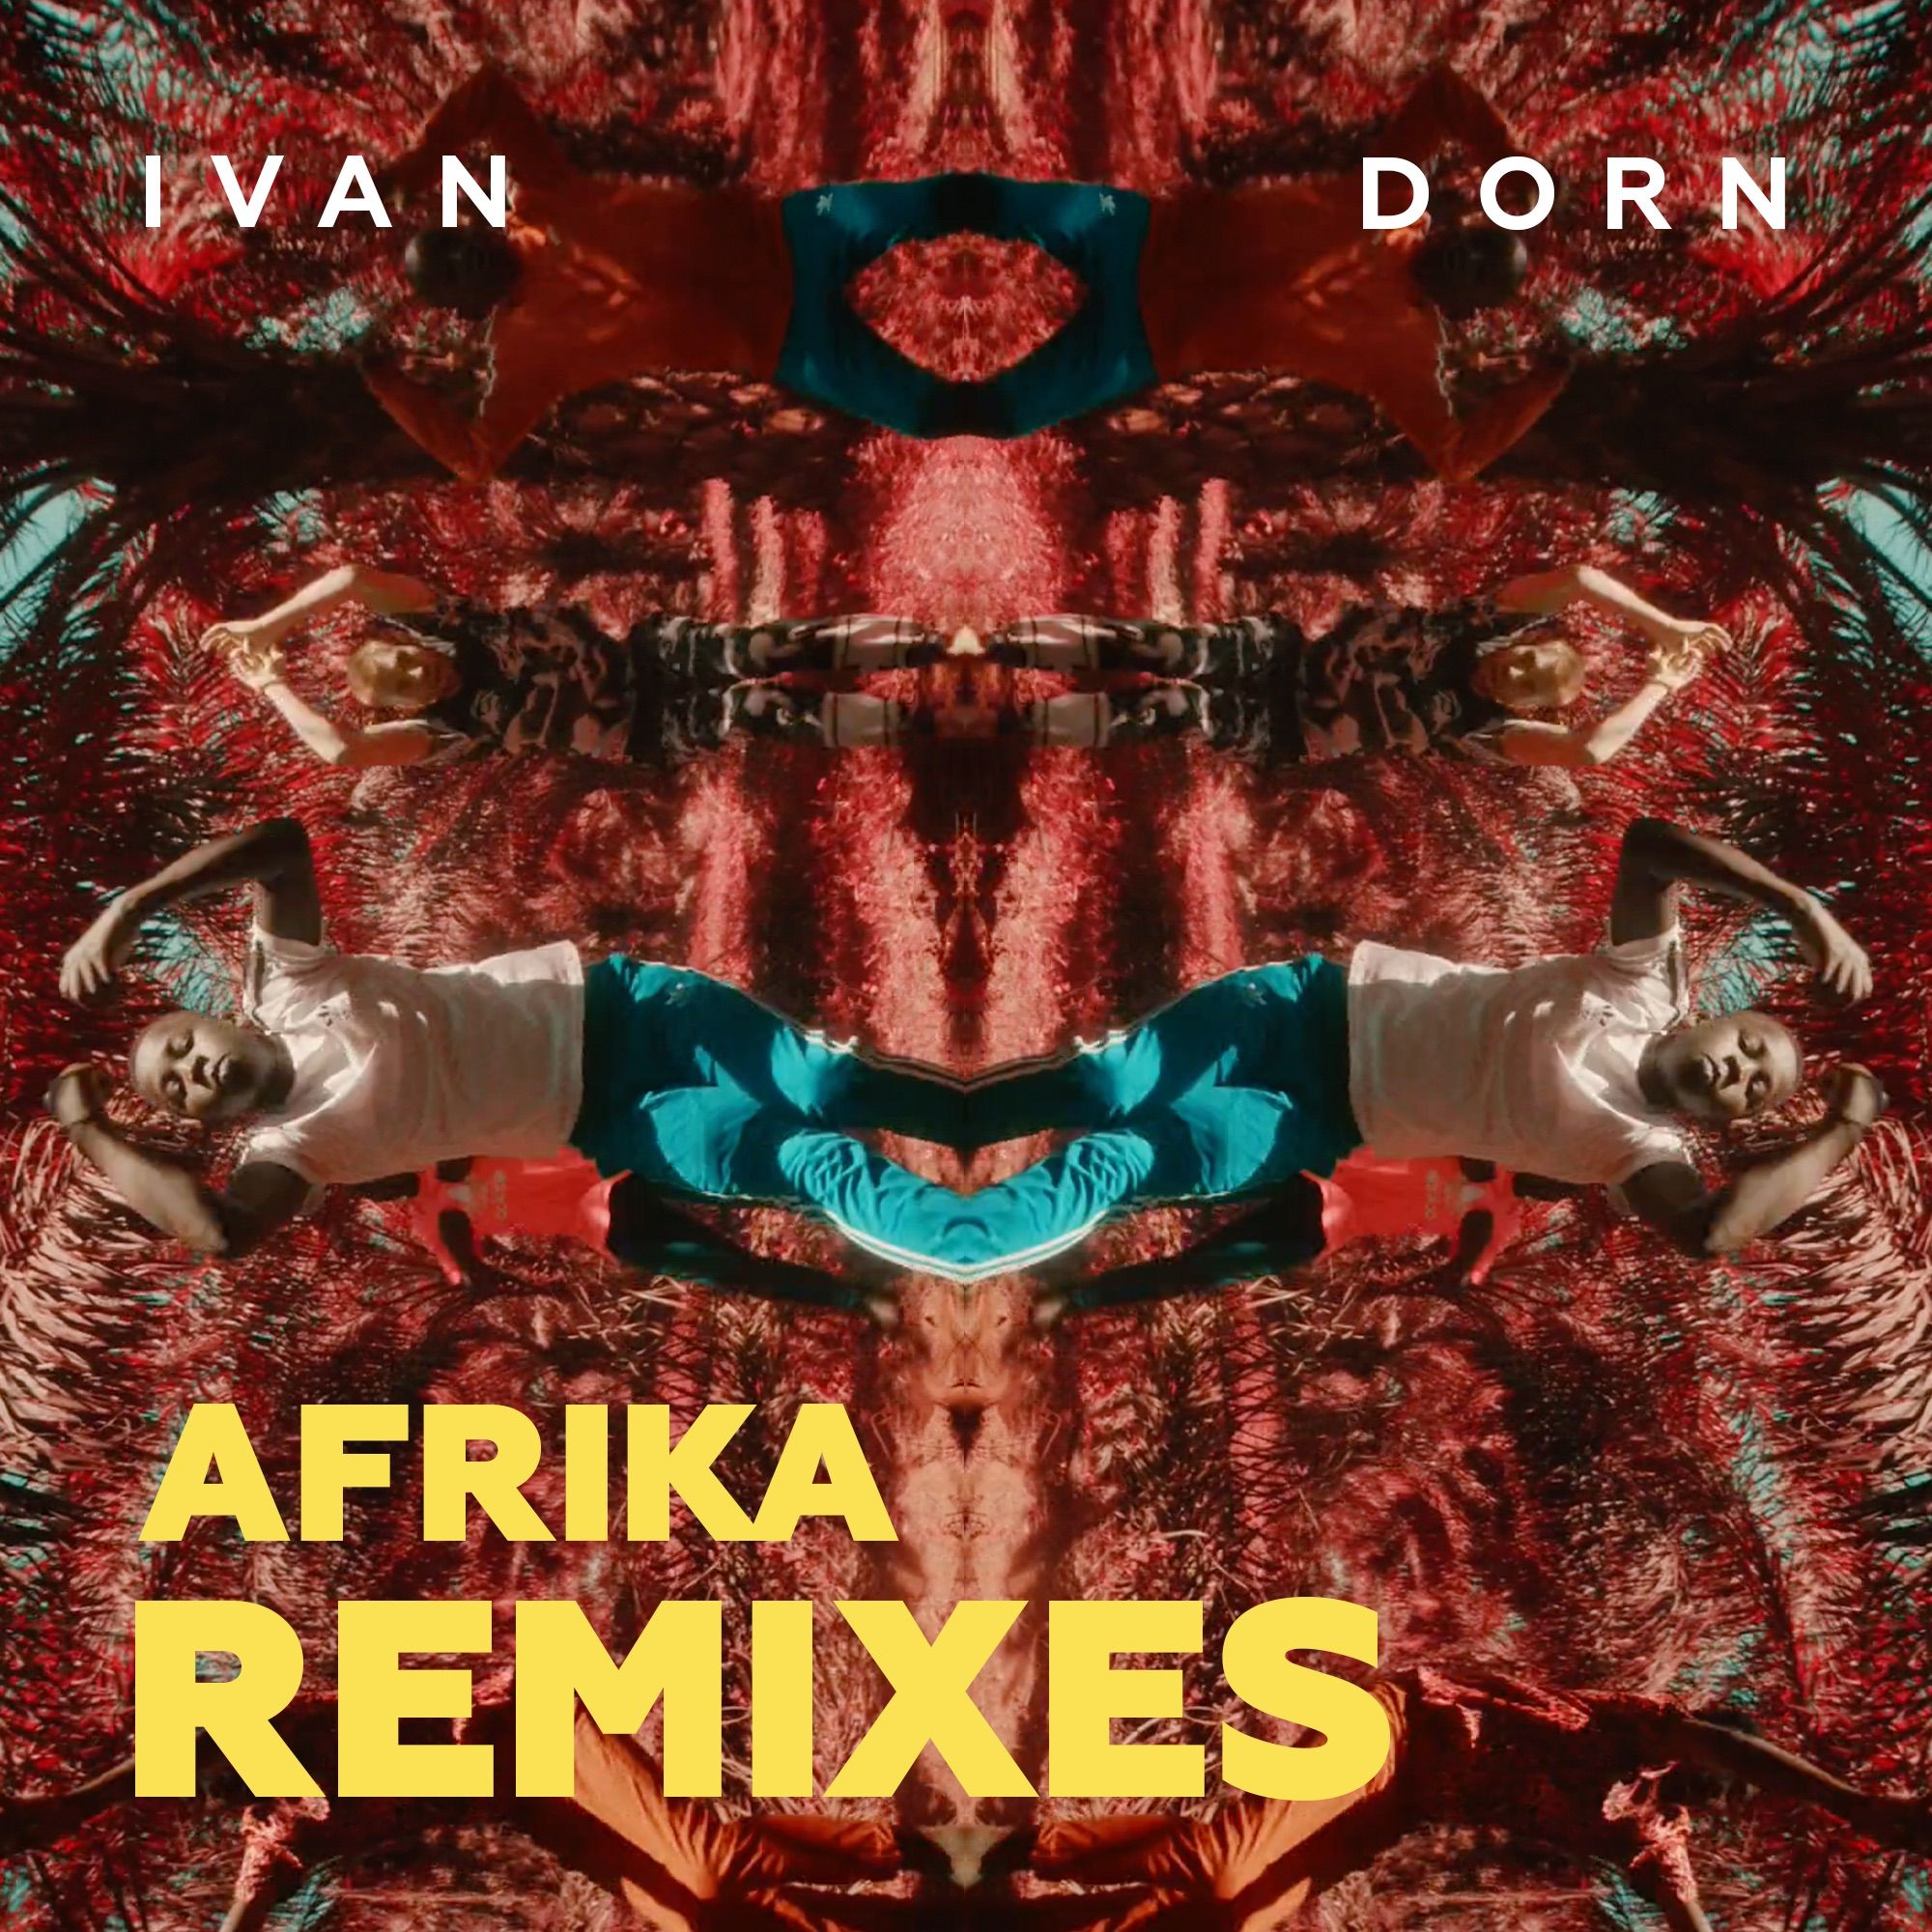 ivan_dorn_-_afrika_remixes.jpg